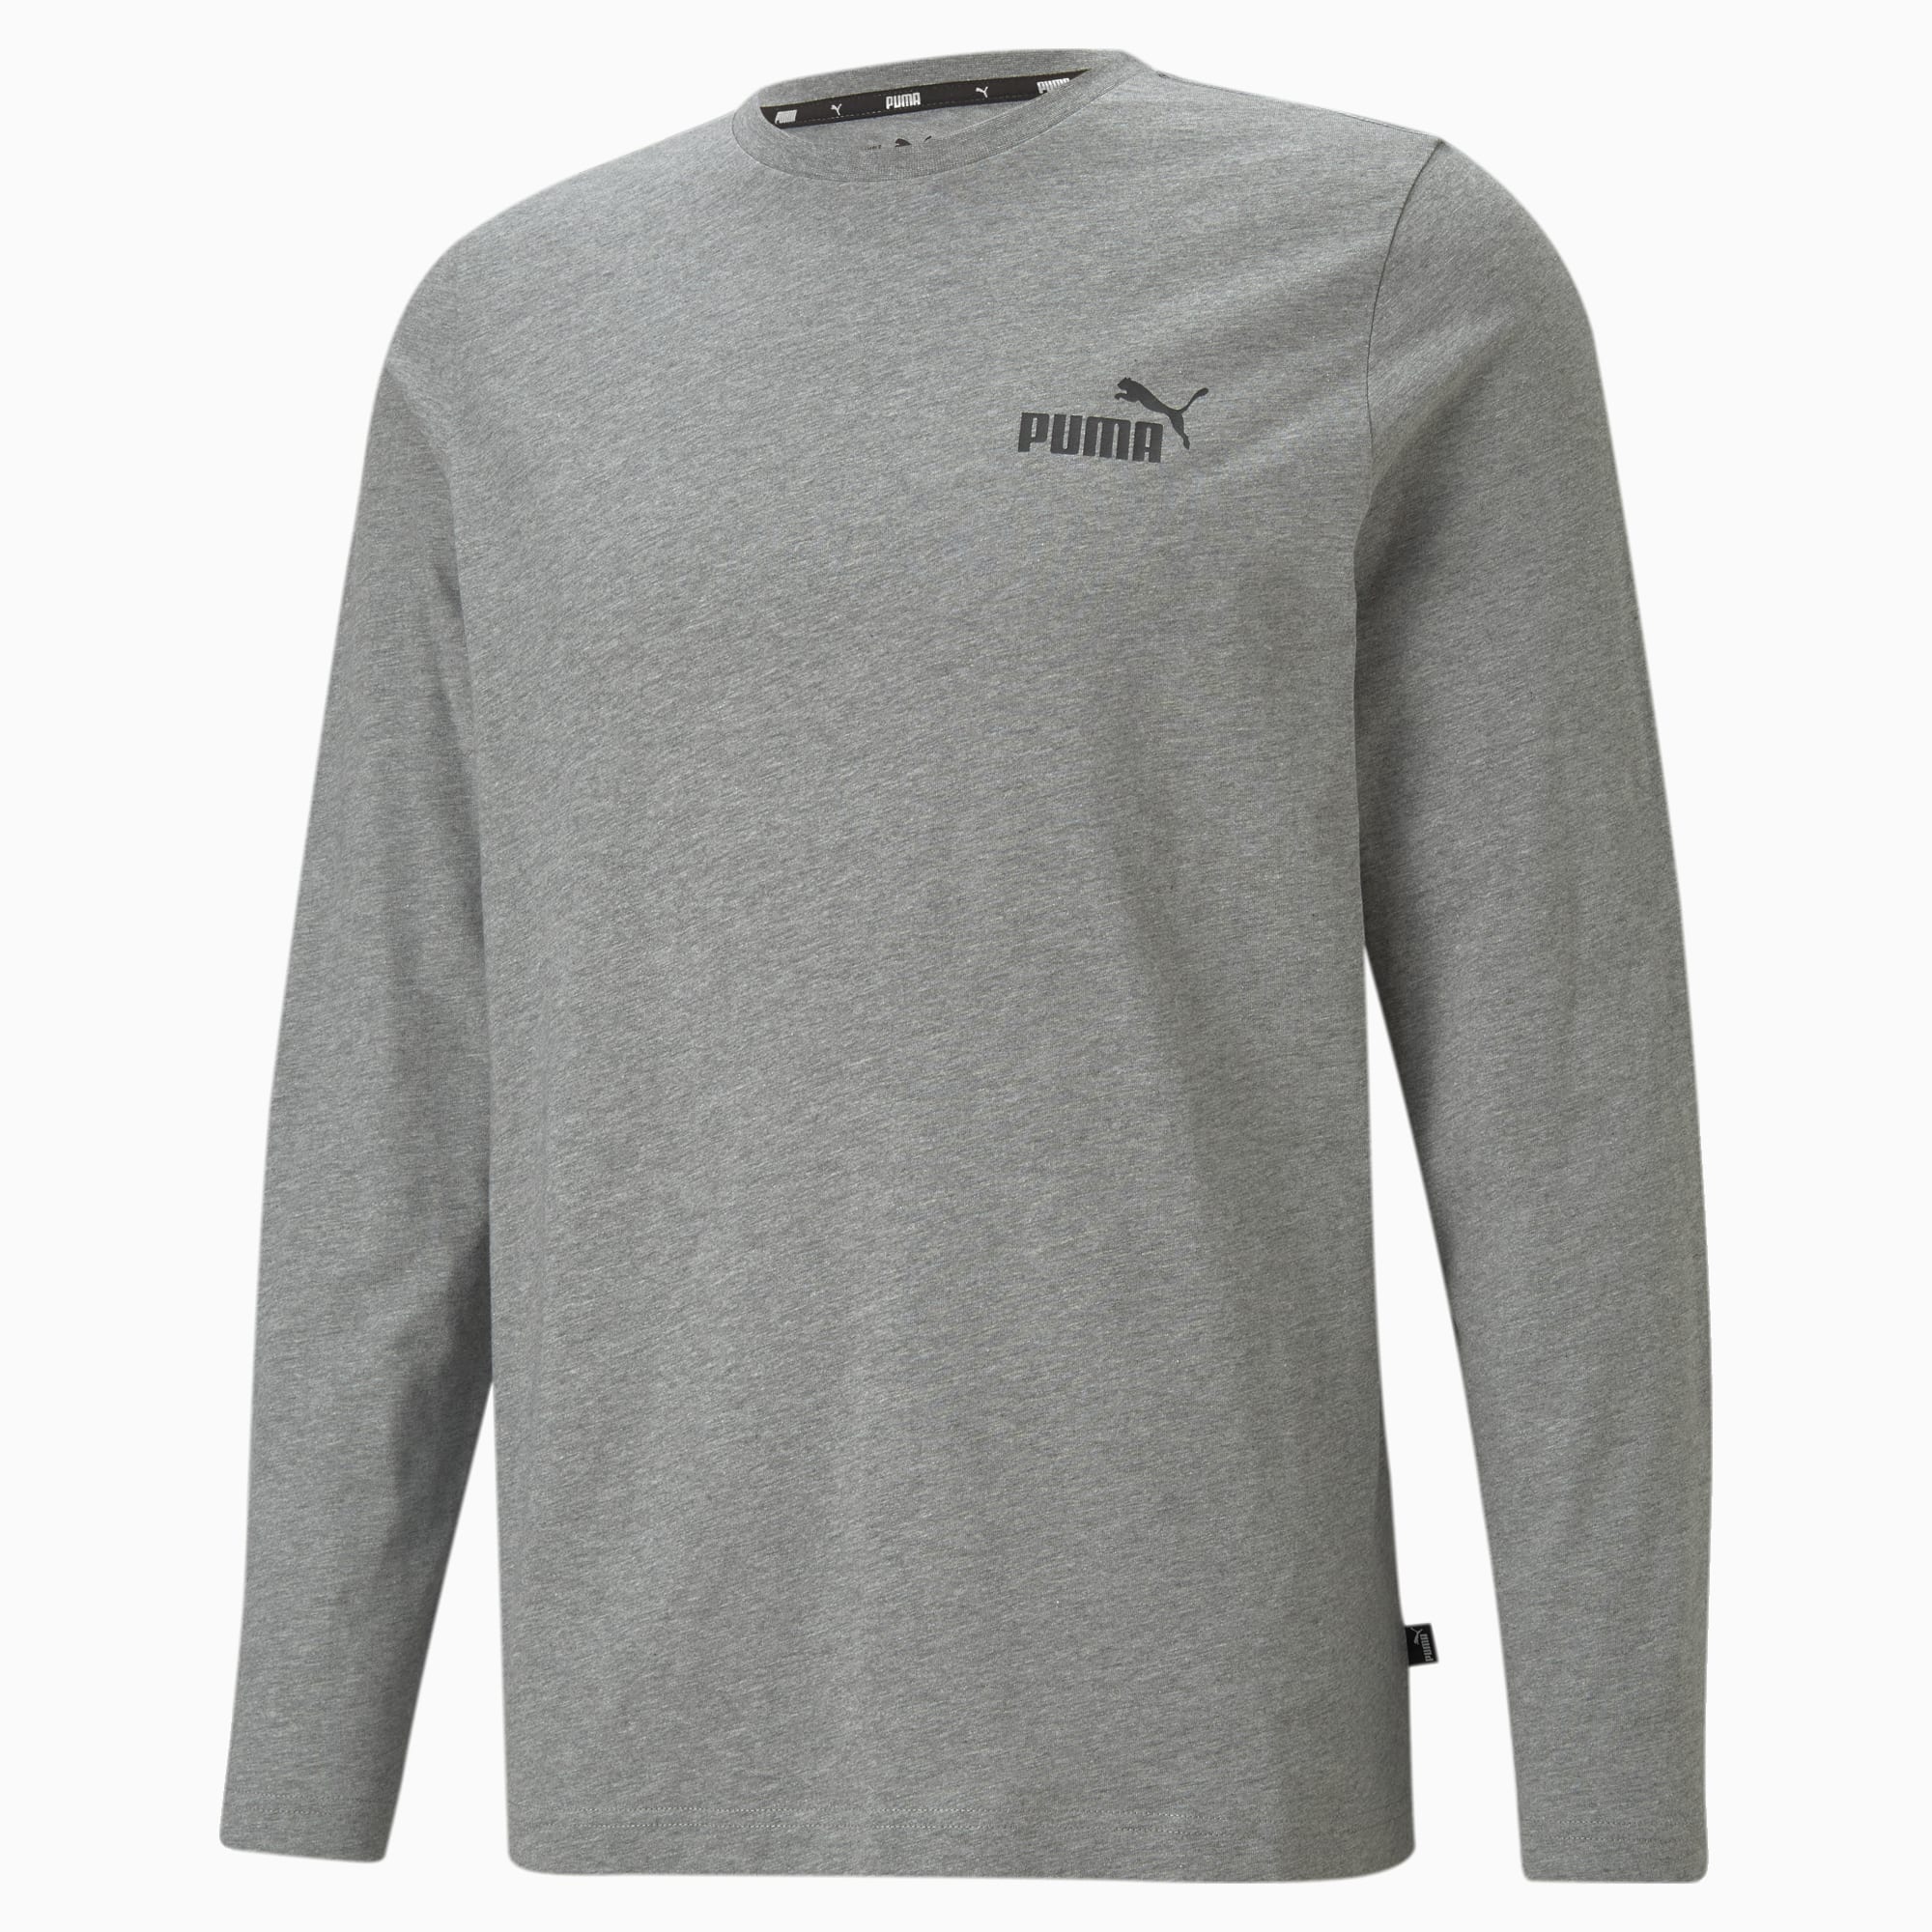 PUMA Essentials Long Sleeve Men's T-Shirt, Medium Grey Heather, Size XXS, Clothing